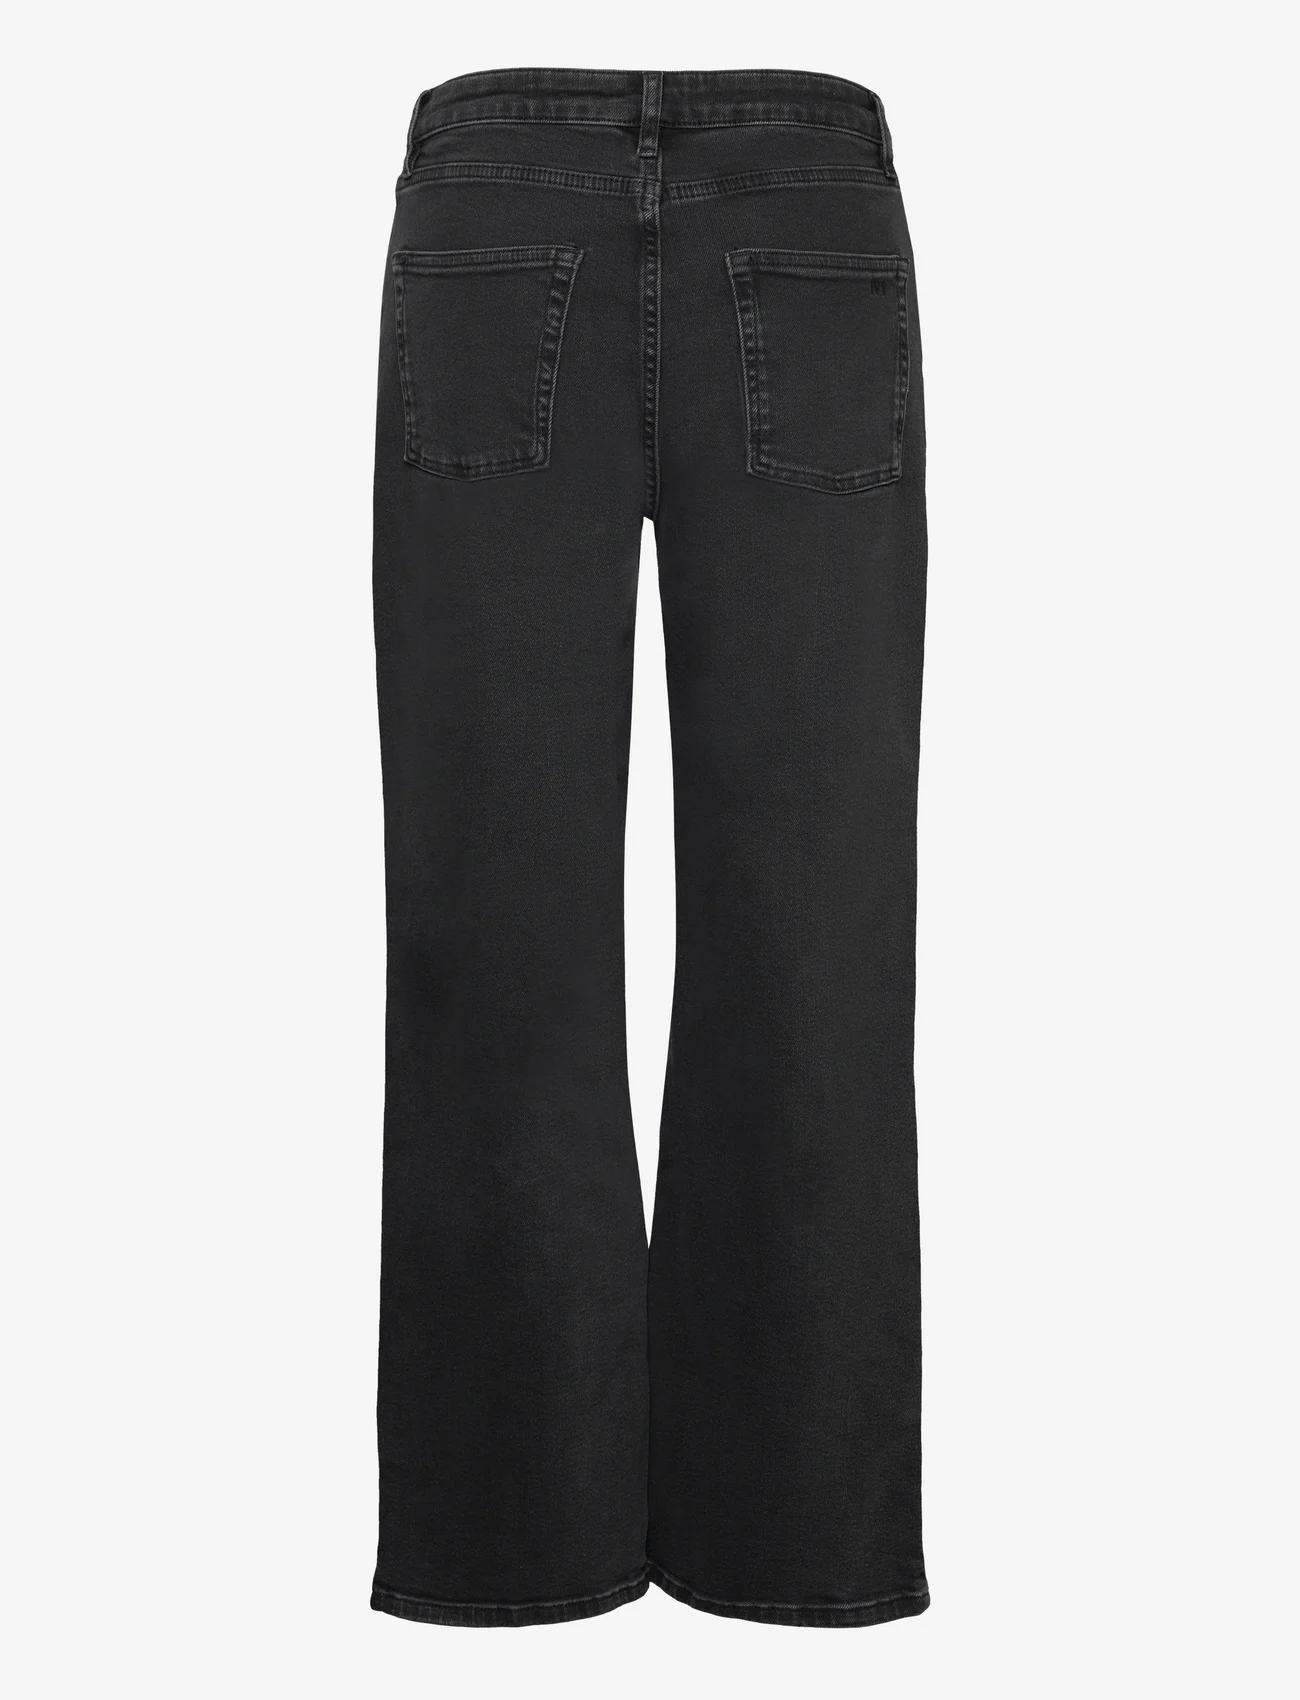 IVY Copenhagen - IVY-Brooke Jeans Wash Original Blac - laia säärega teksad - black - 1